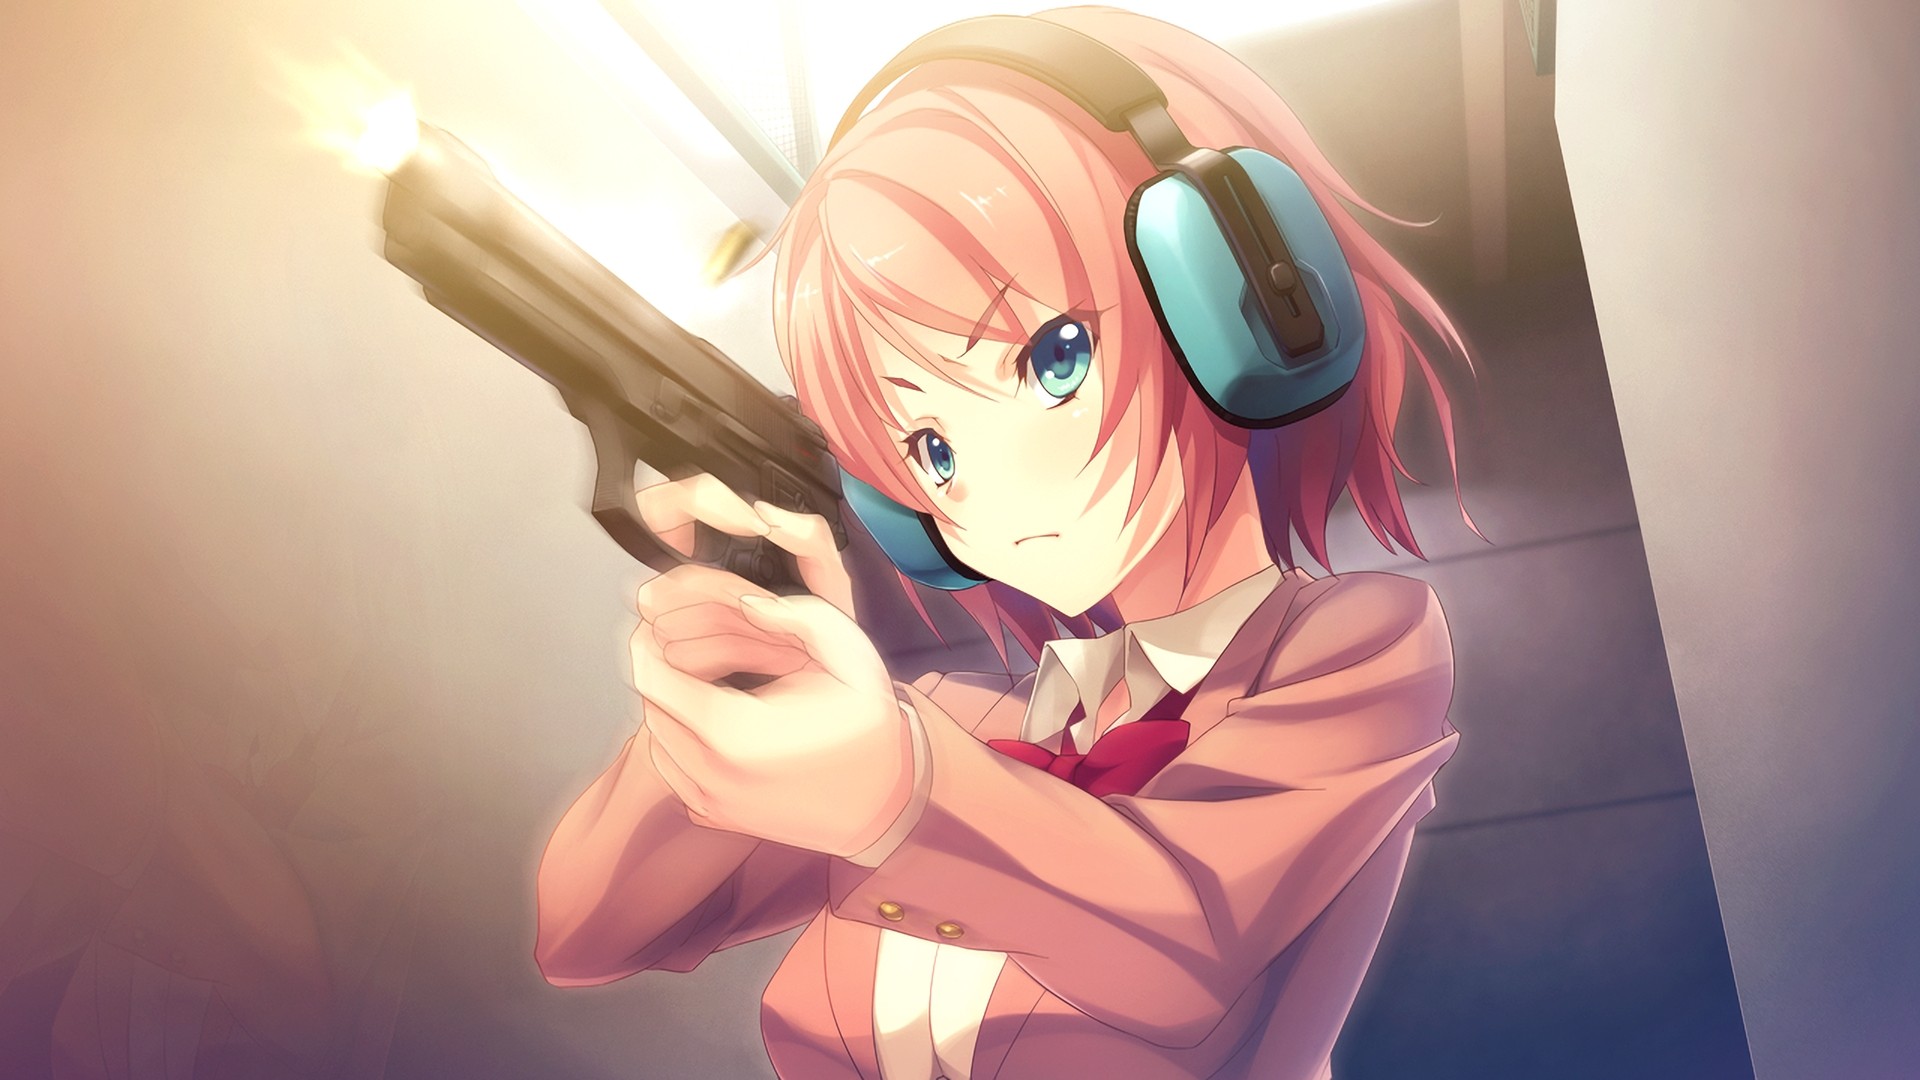 Anime 1920x1080 anime girls anime Innocent Bullet Kanzaki Sayaka Beretta M9 gun school uniform headphones short hair redhead blue eyes Oosaki Shin'ya girls with guns weapon women